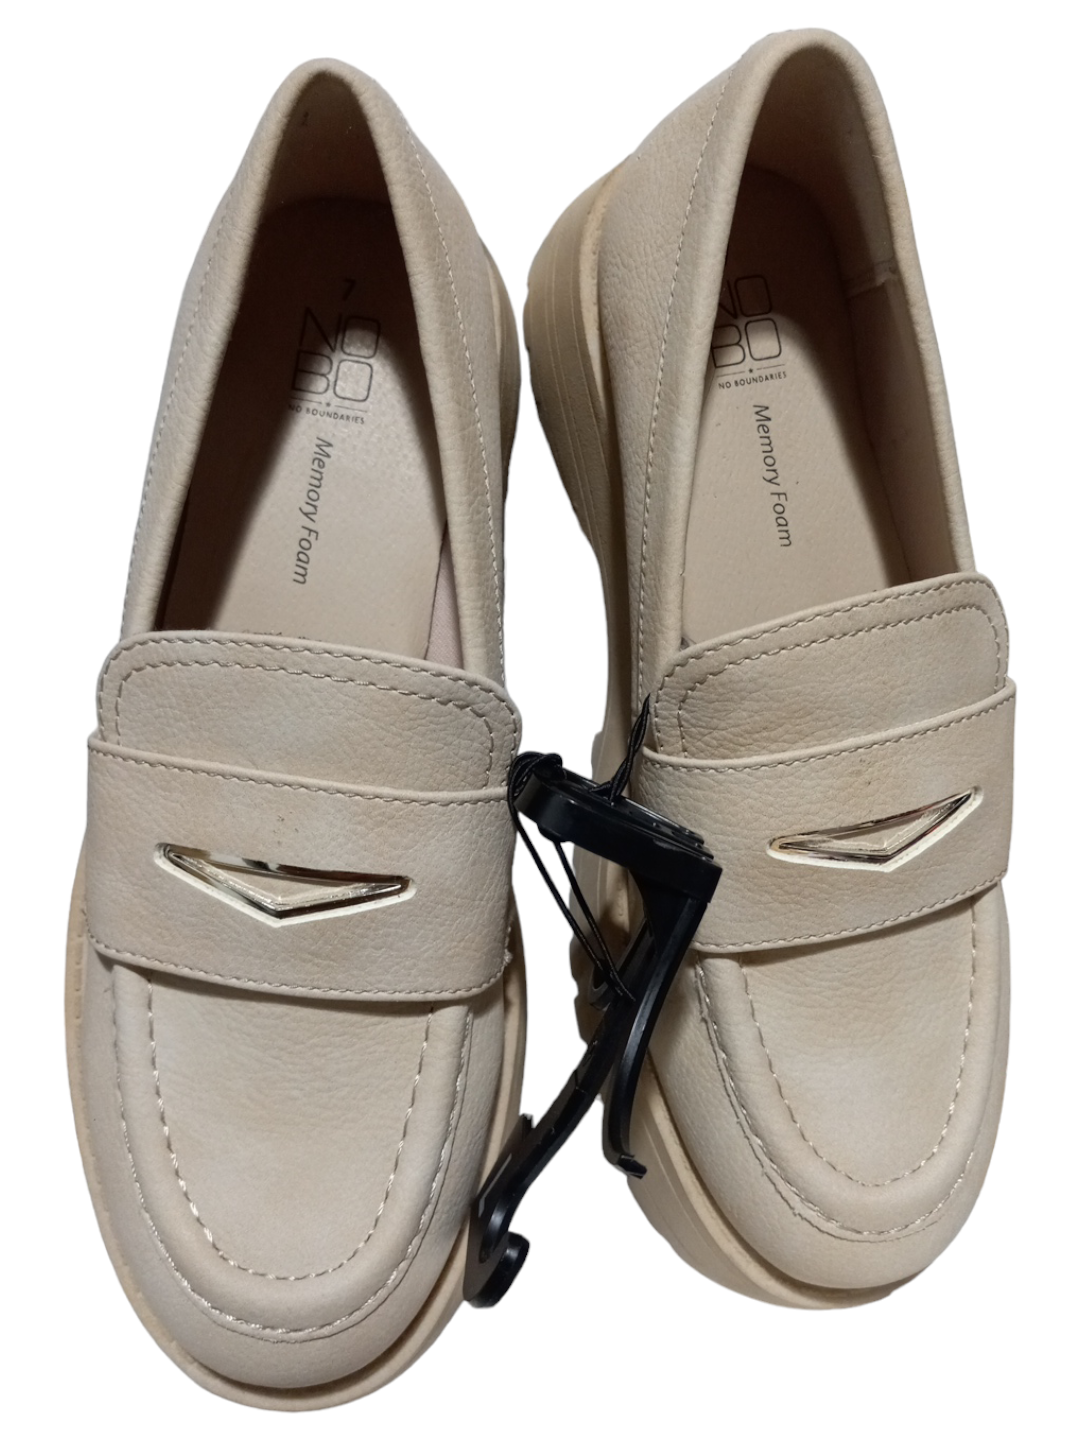 Cream Shoes Flats No Boundaries, Size 7